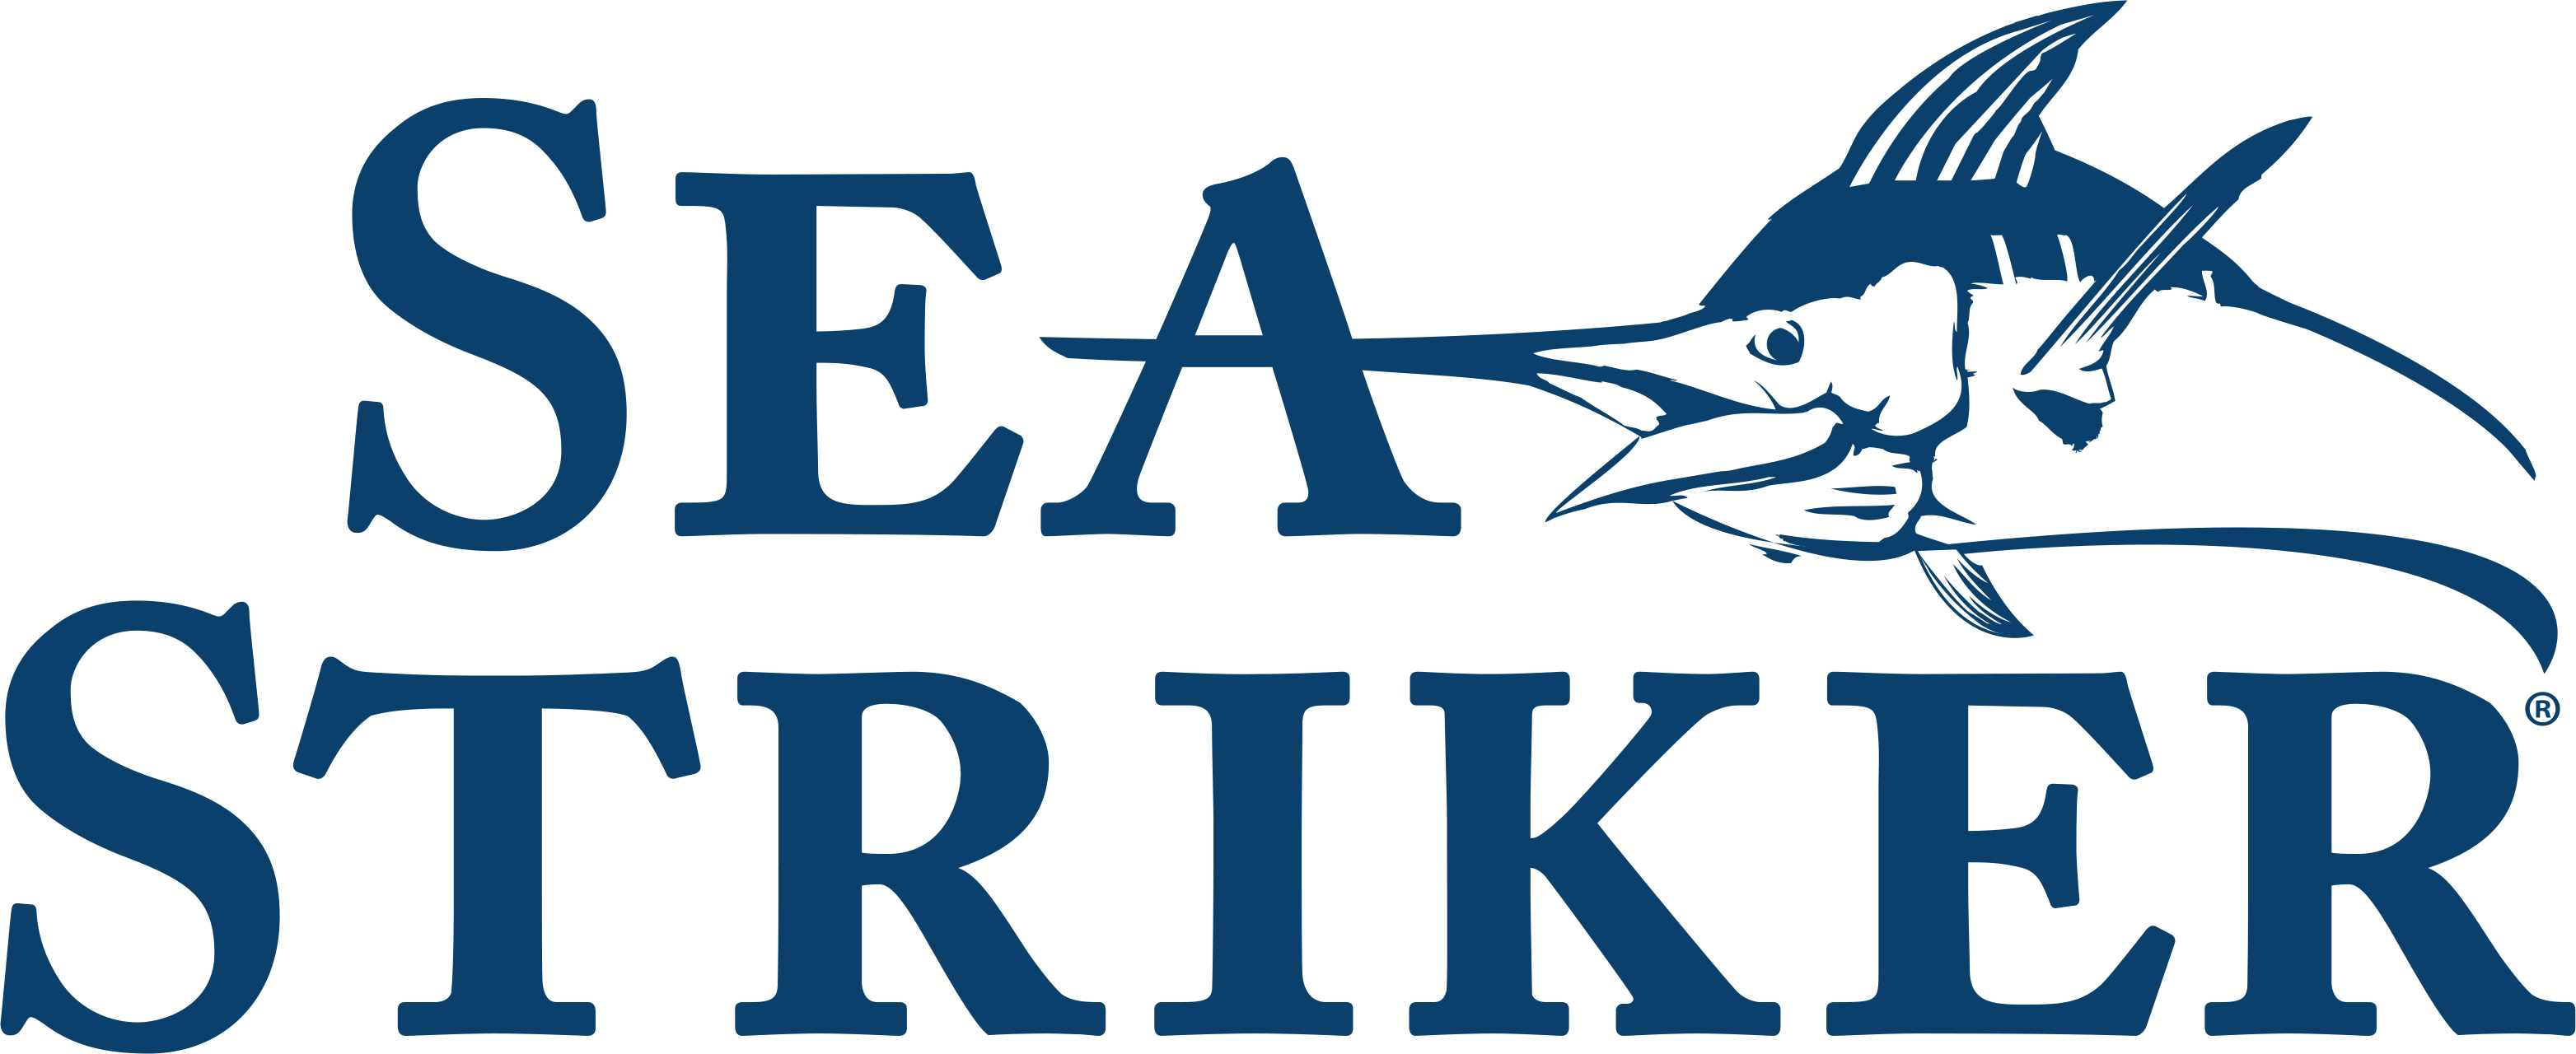 Sea Striker Double-drop Shrimp Fly Fishing Rig, Blue/White Flies, 60# Leader Line, #7/0 Hooks - image 2 of 2